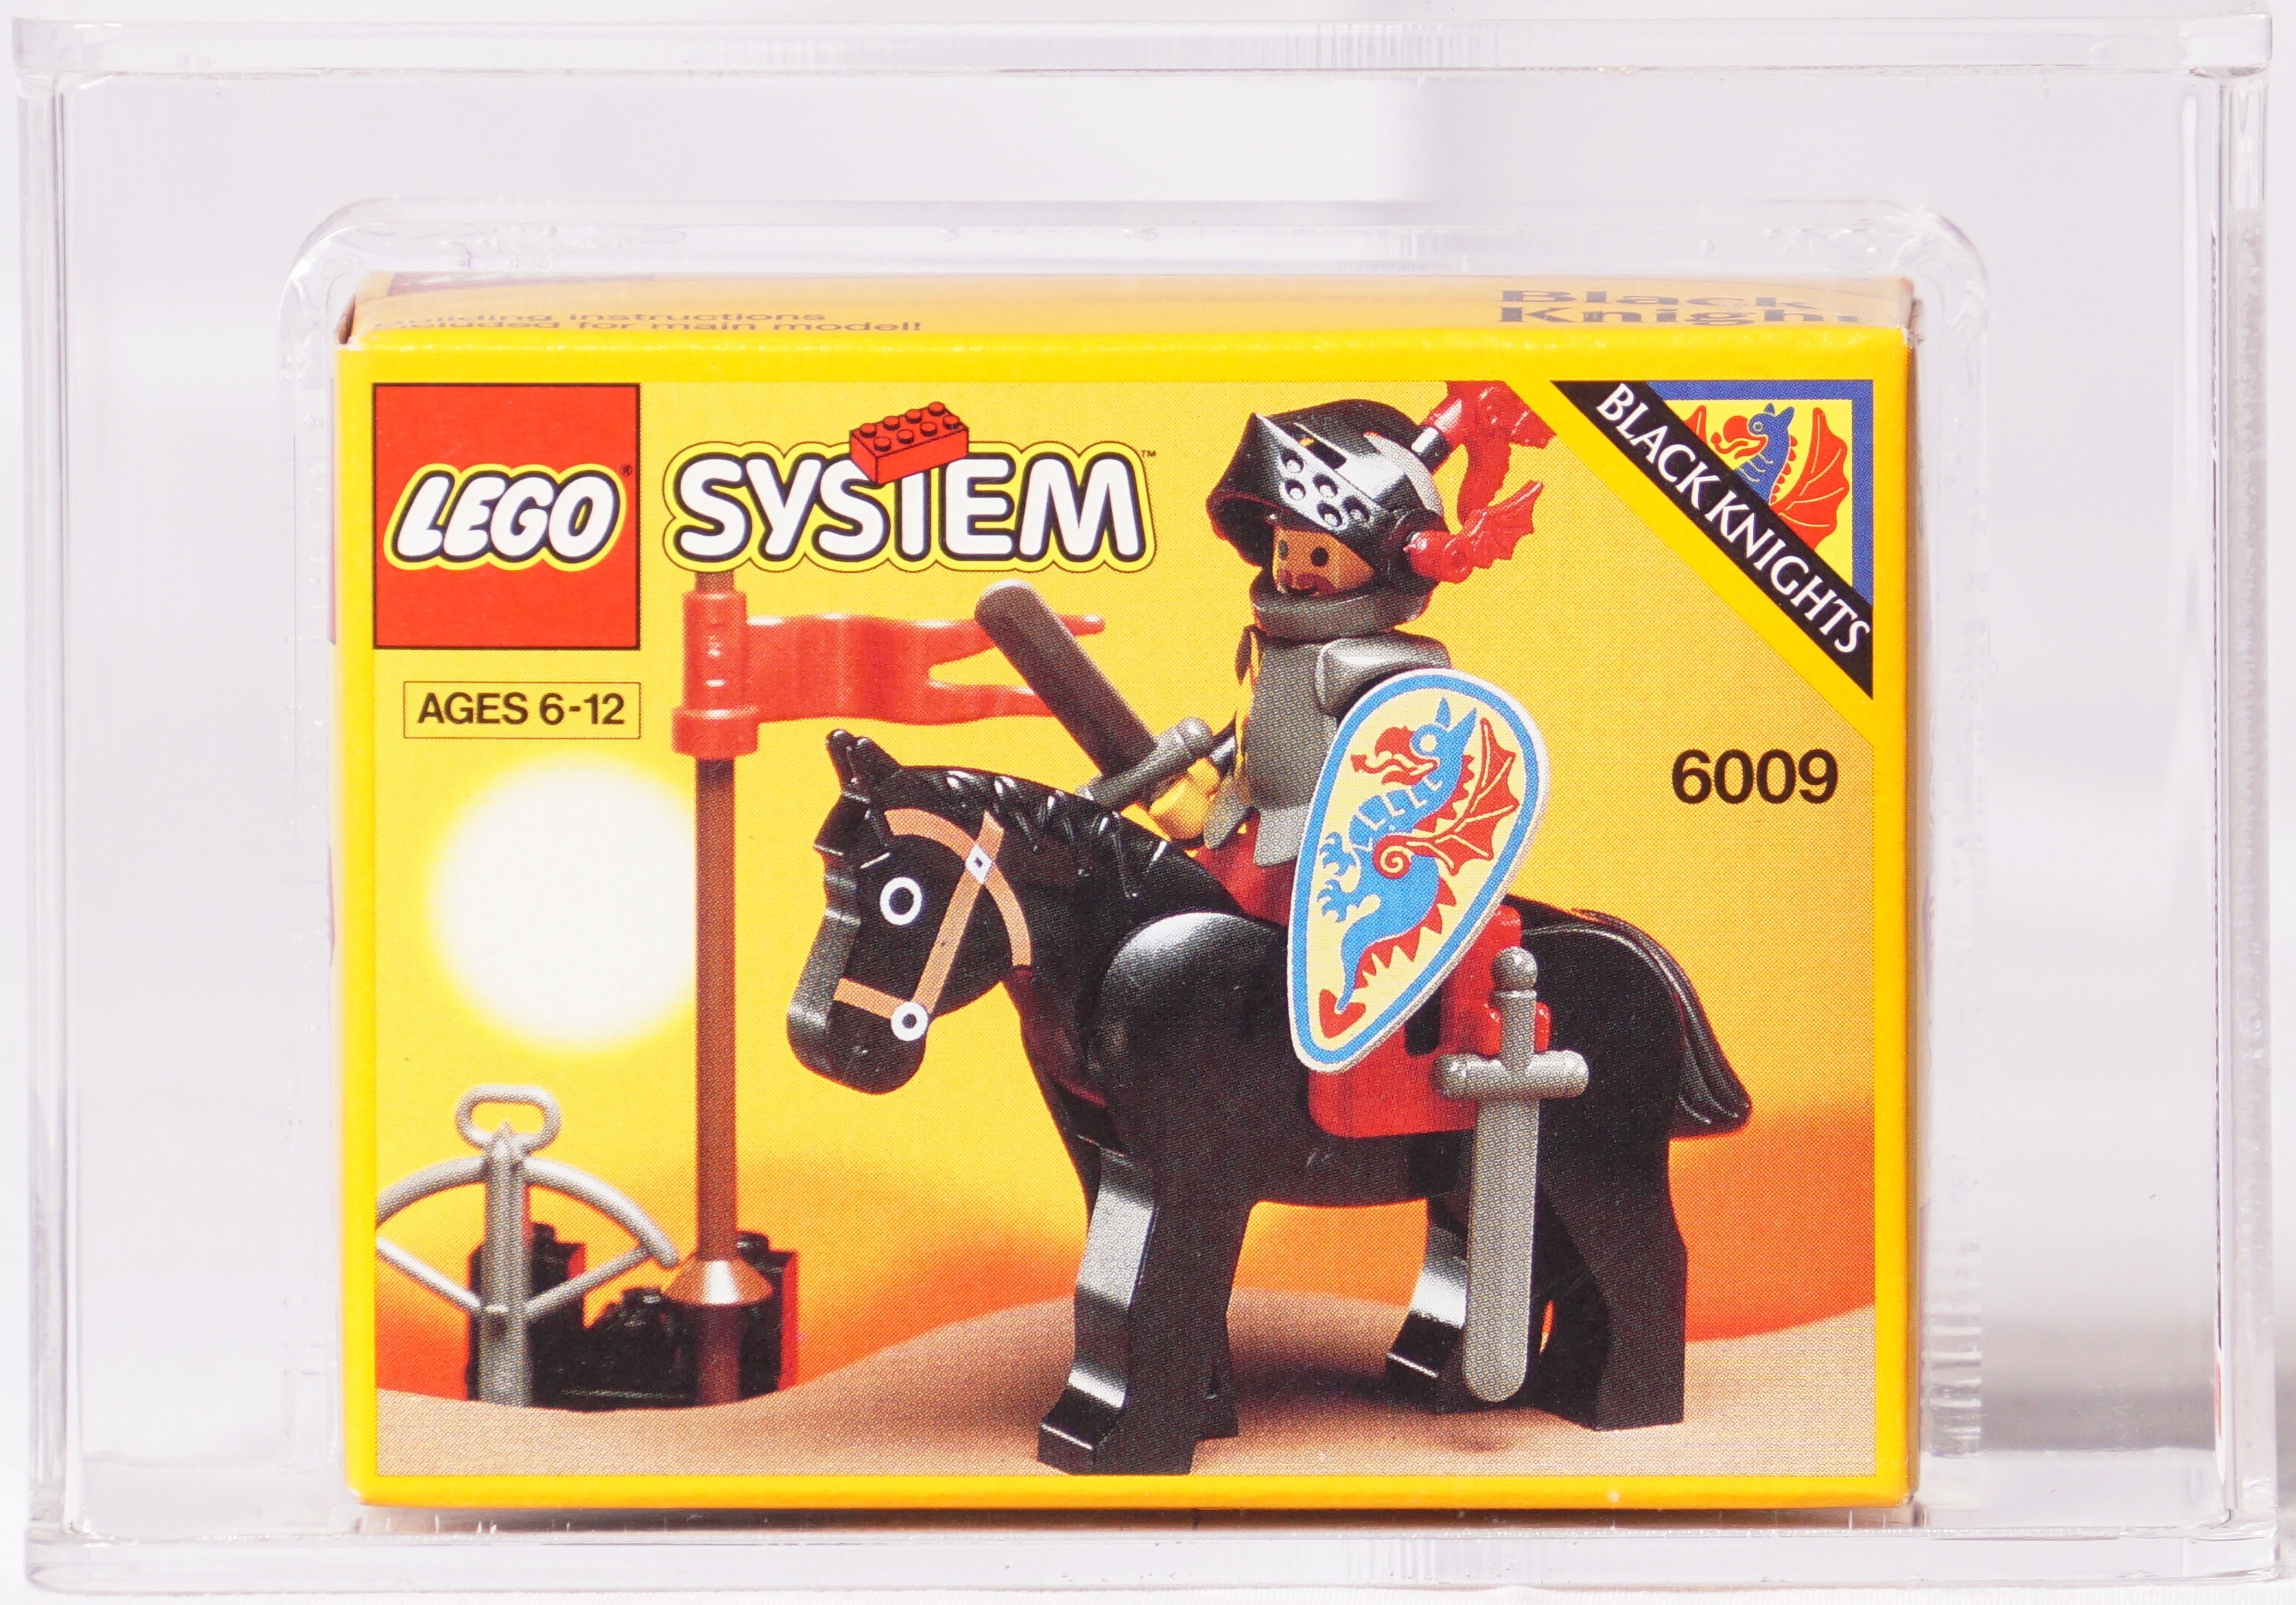 manuskript Født Nyttig 1995 LEGO Boxed Lego System - Black Knight #6009